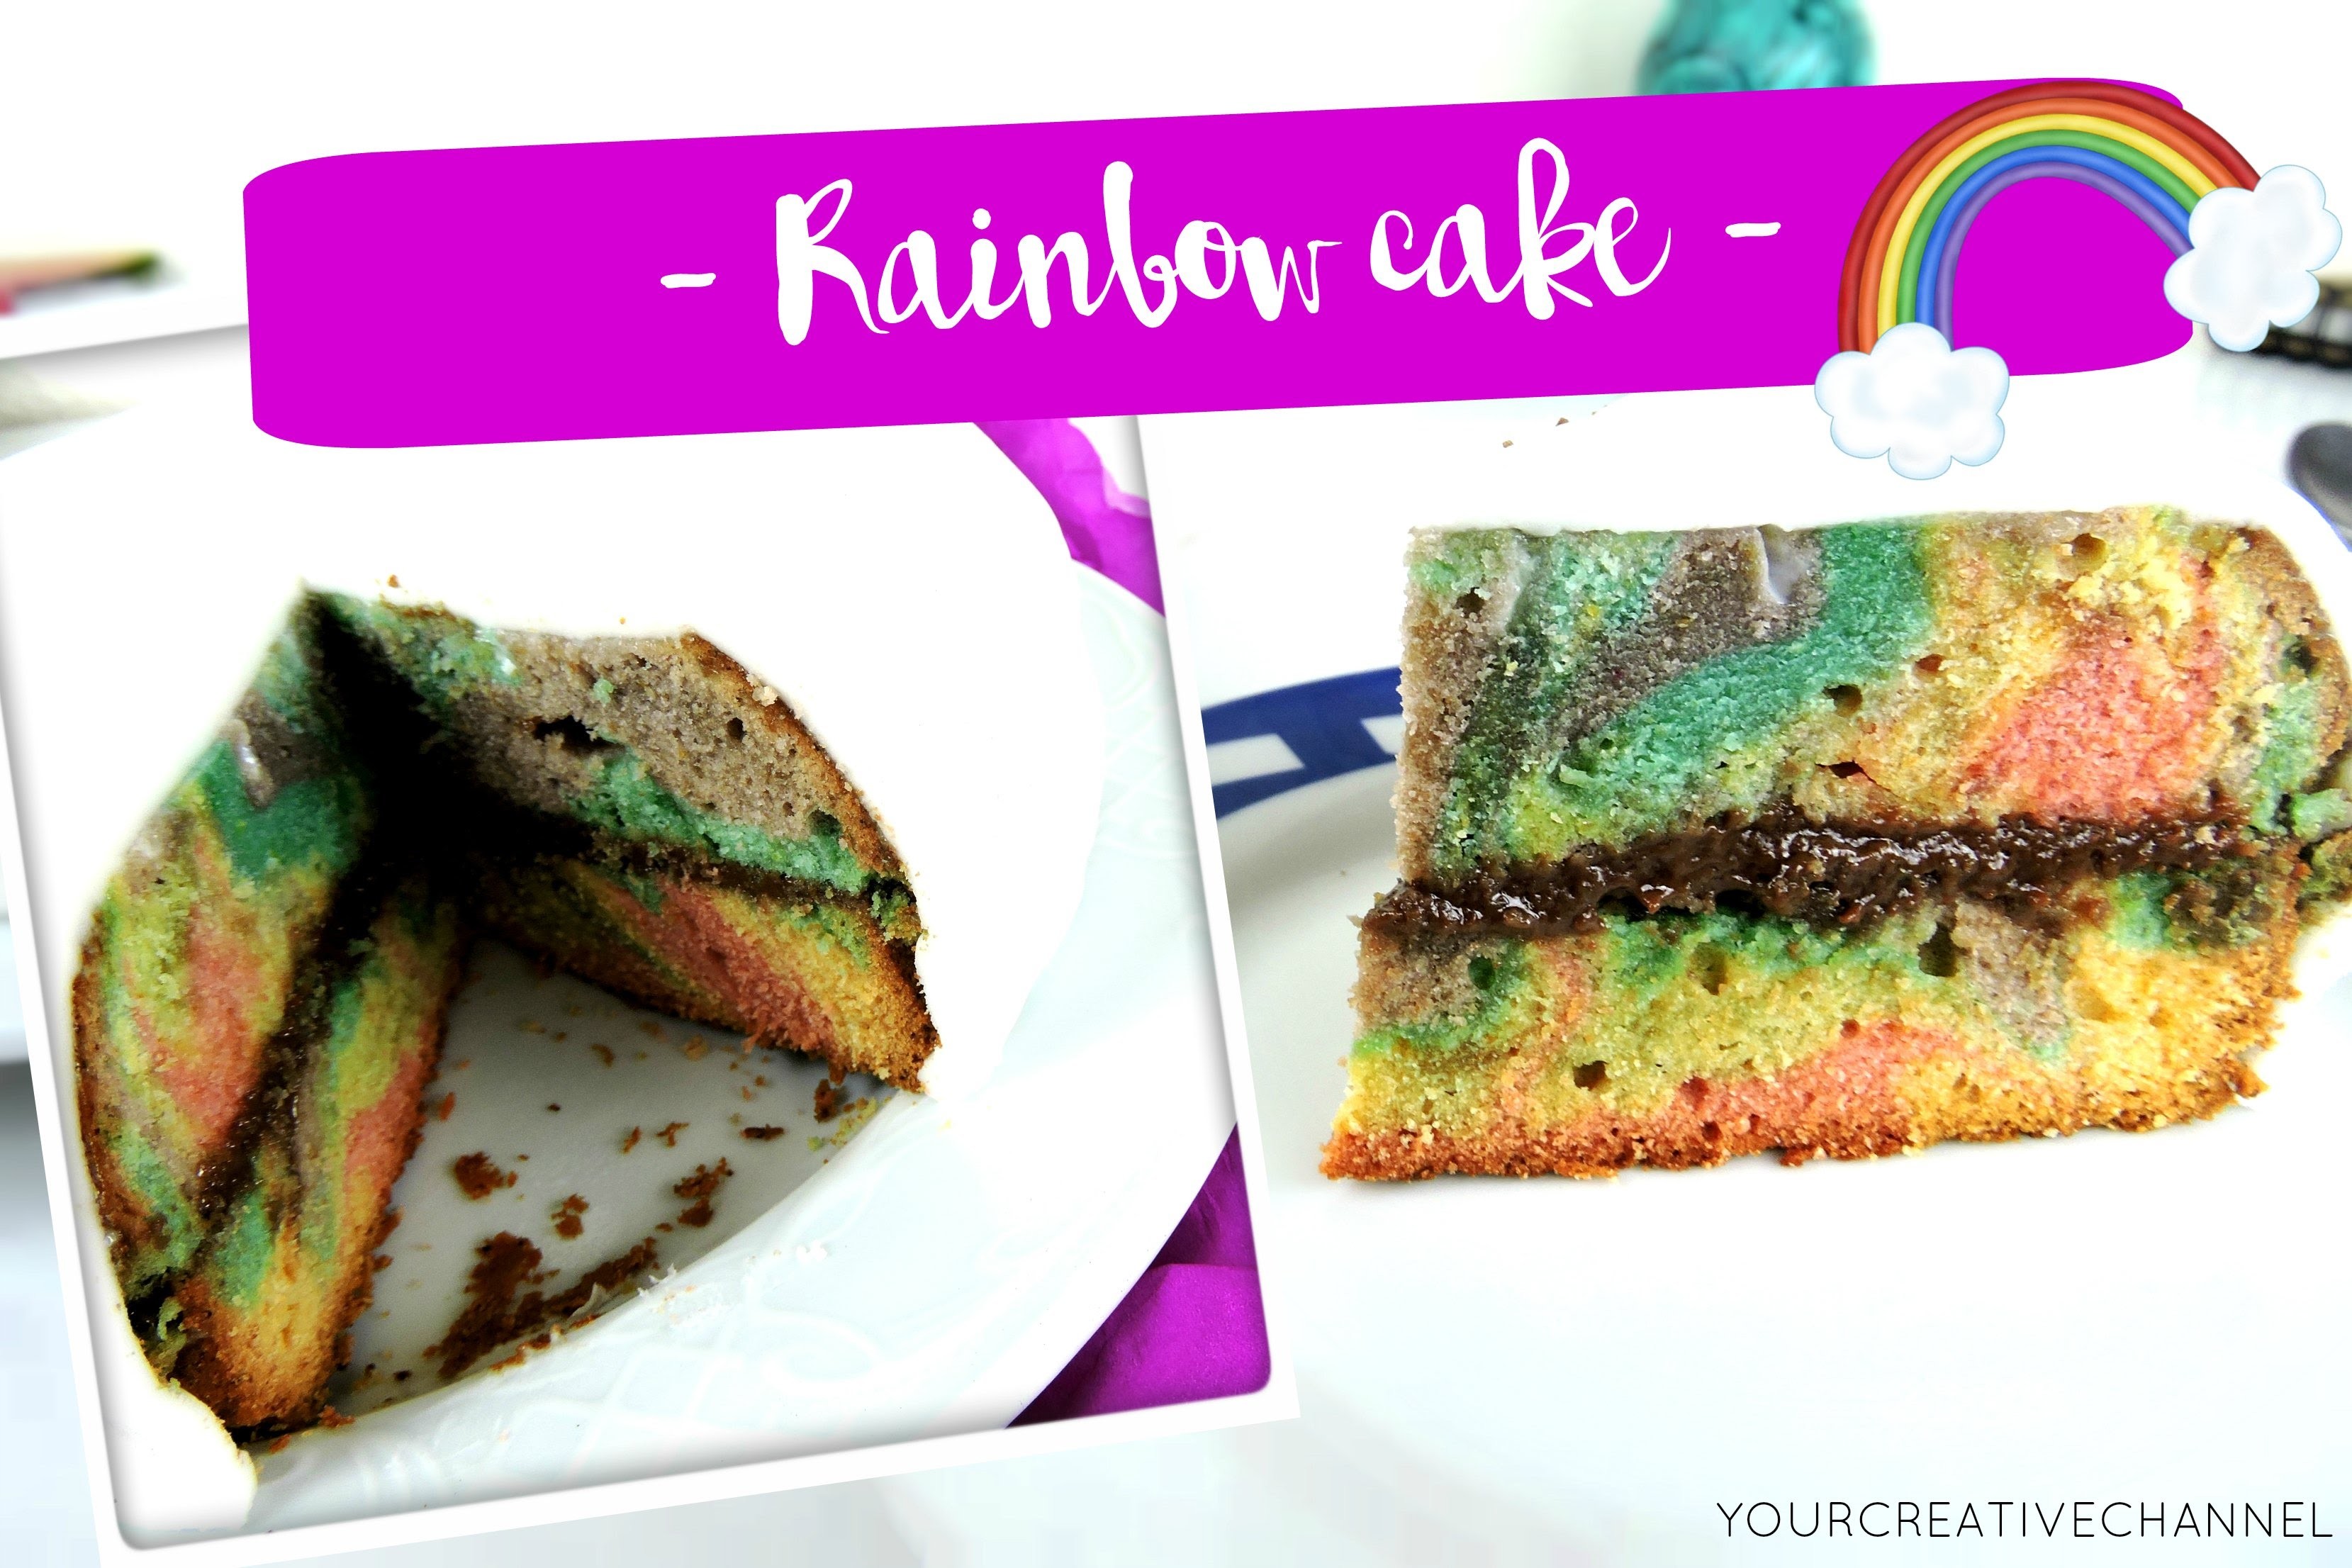 Pastel arcoiris - rainbow cake